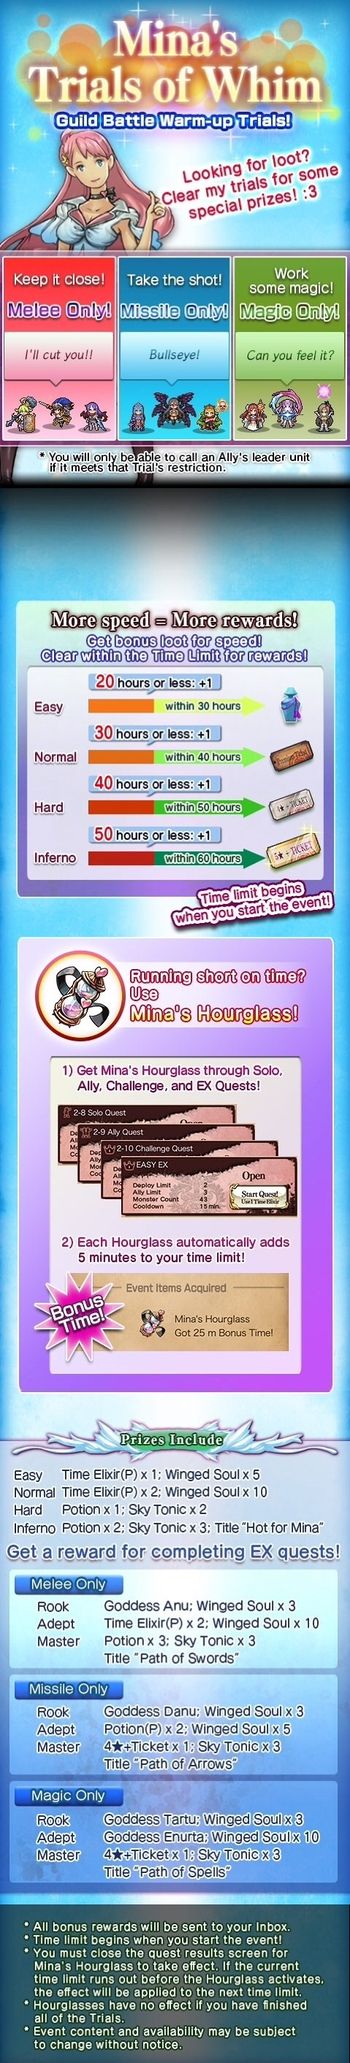 Mina's Trials of Whim 11 release.jpg